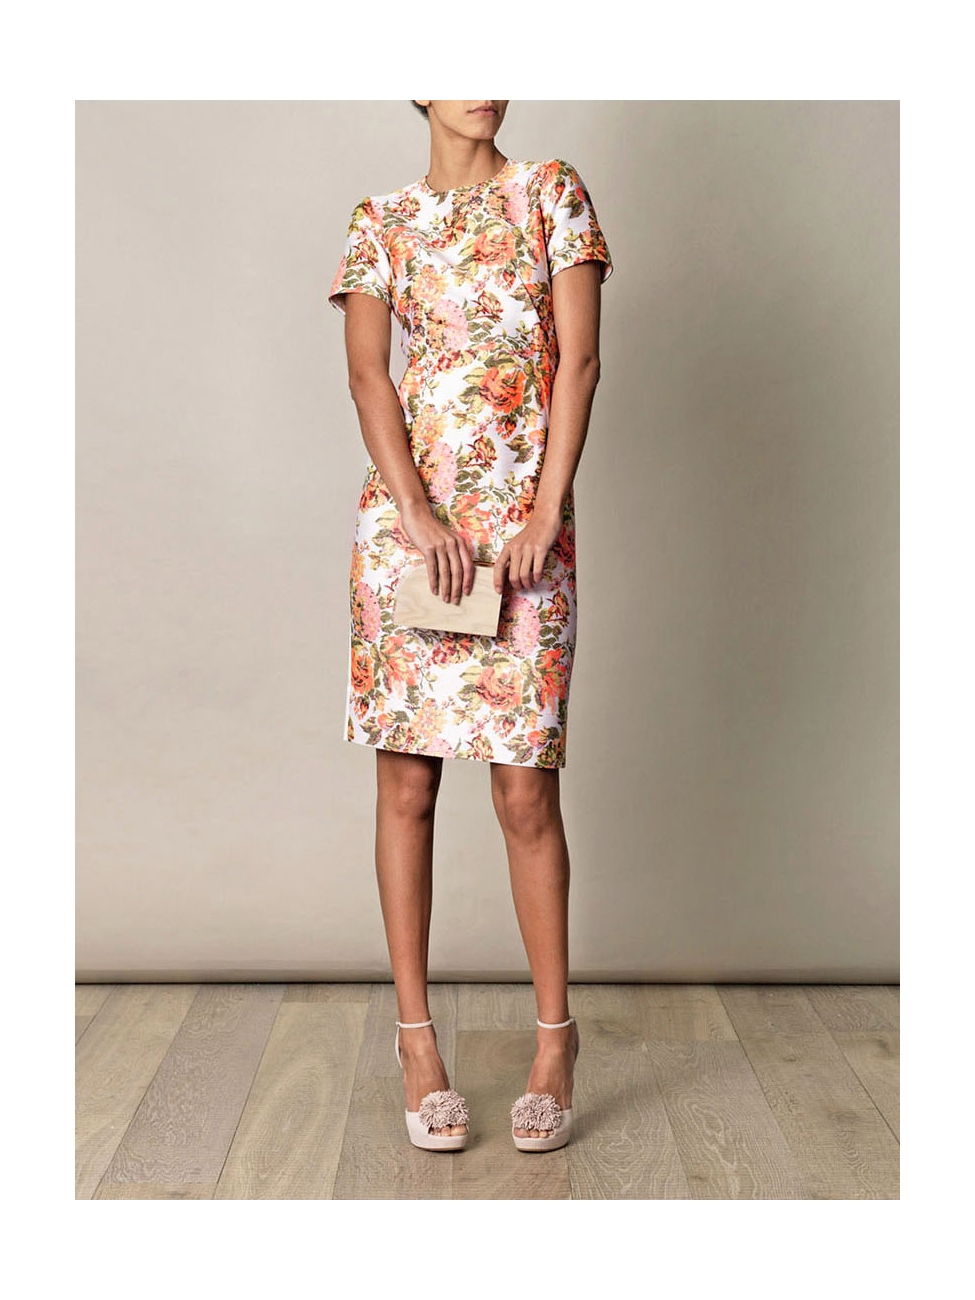 Boutique STELLA MCCARTNEY Ridley neon floral print jacquard dress